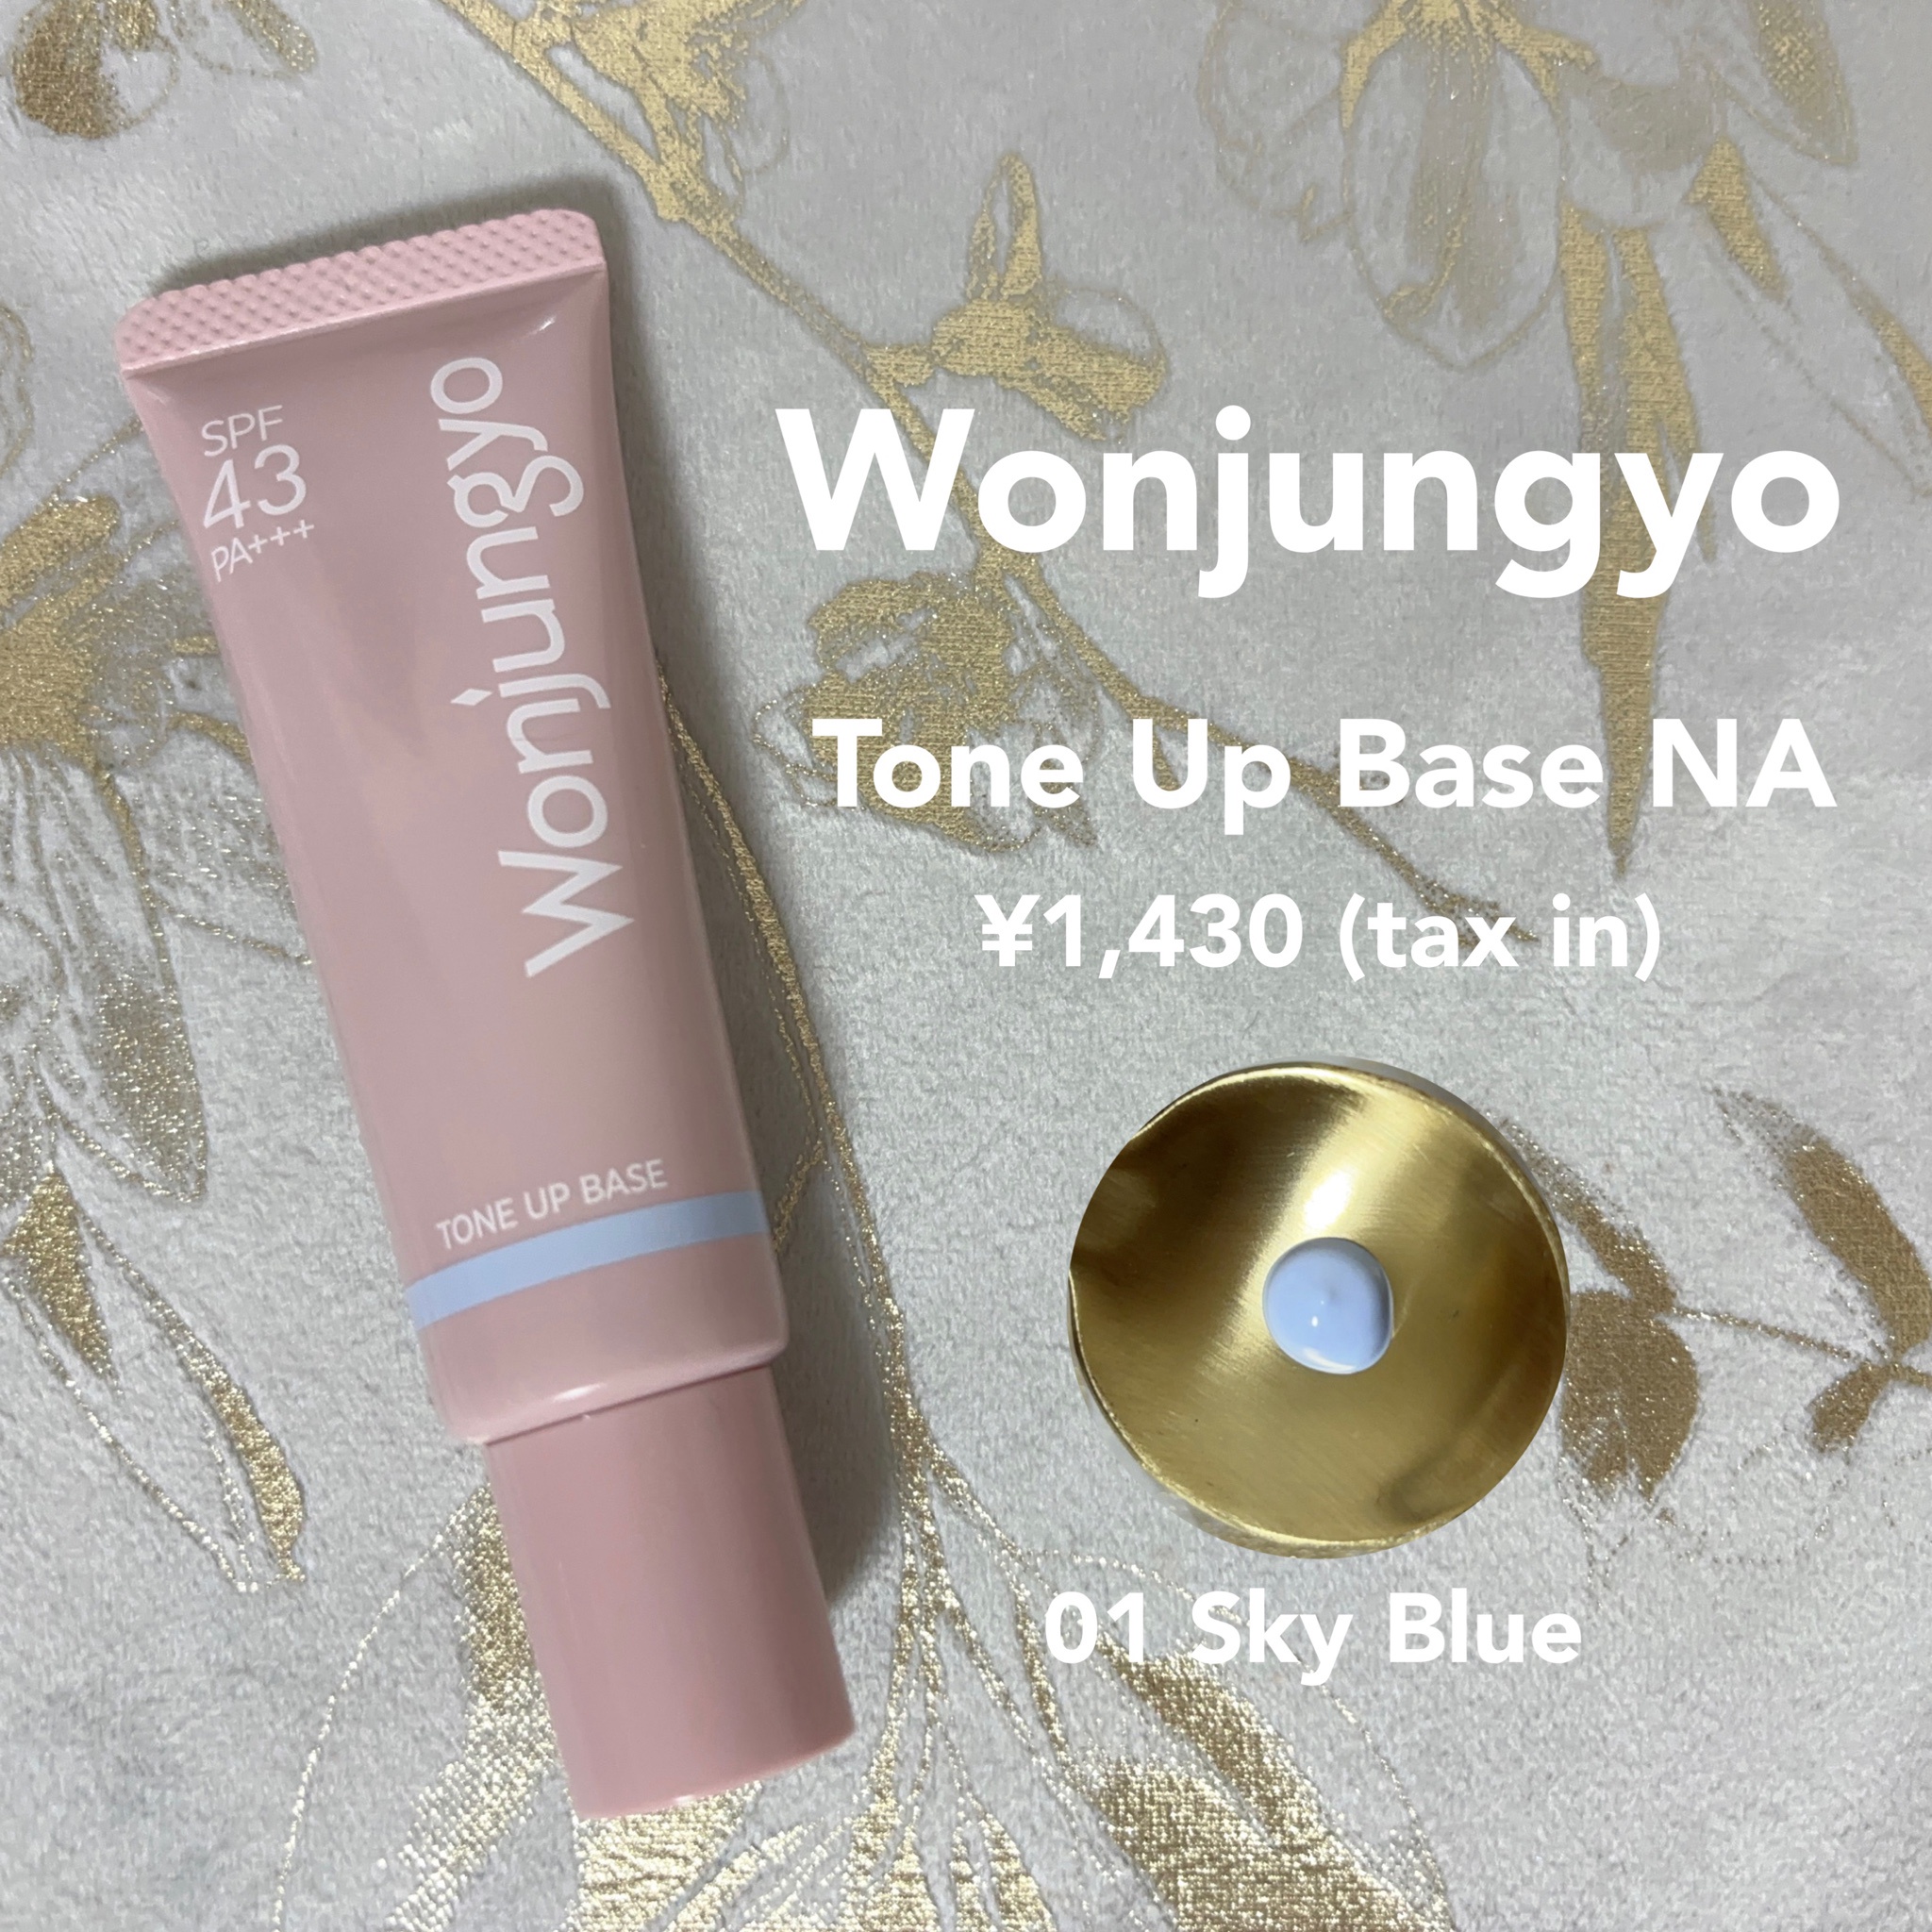 Wonjungyo / ウォンジョンヨ トーンアップベース NAの公式商品